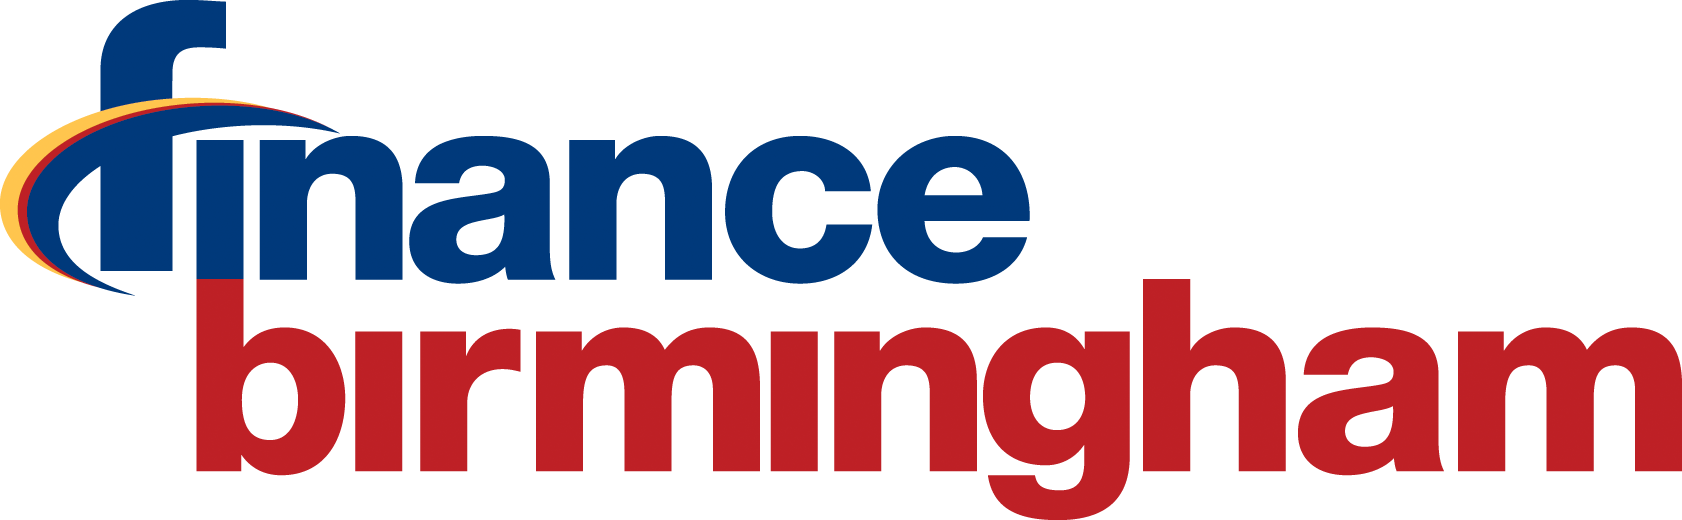 Finance Birmingham logo